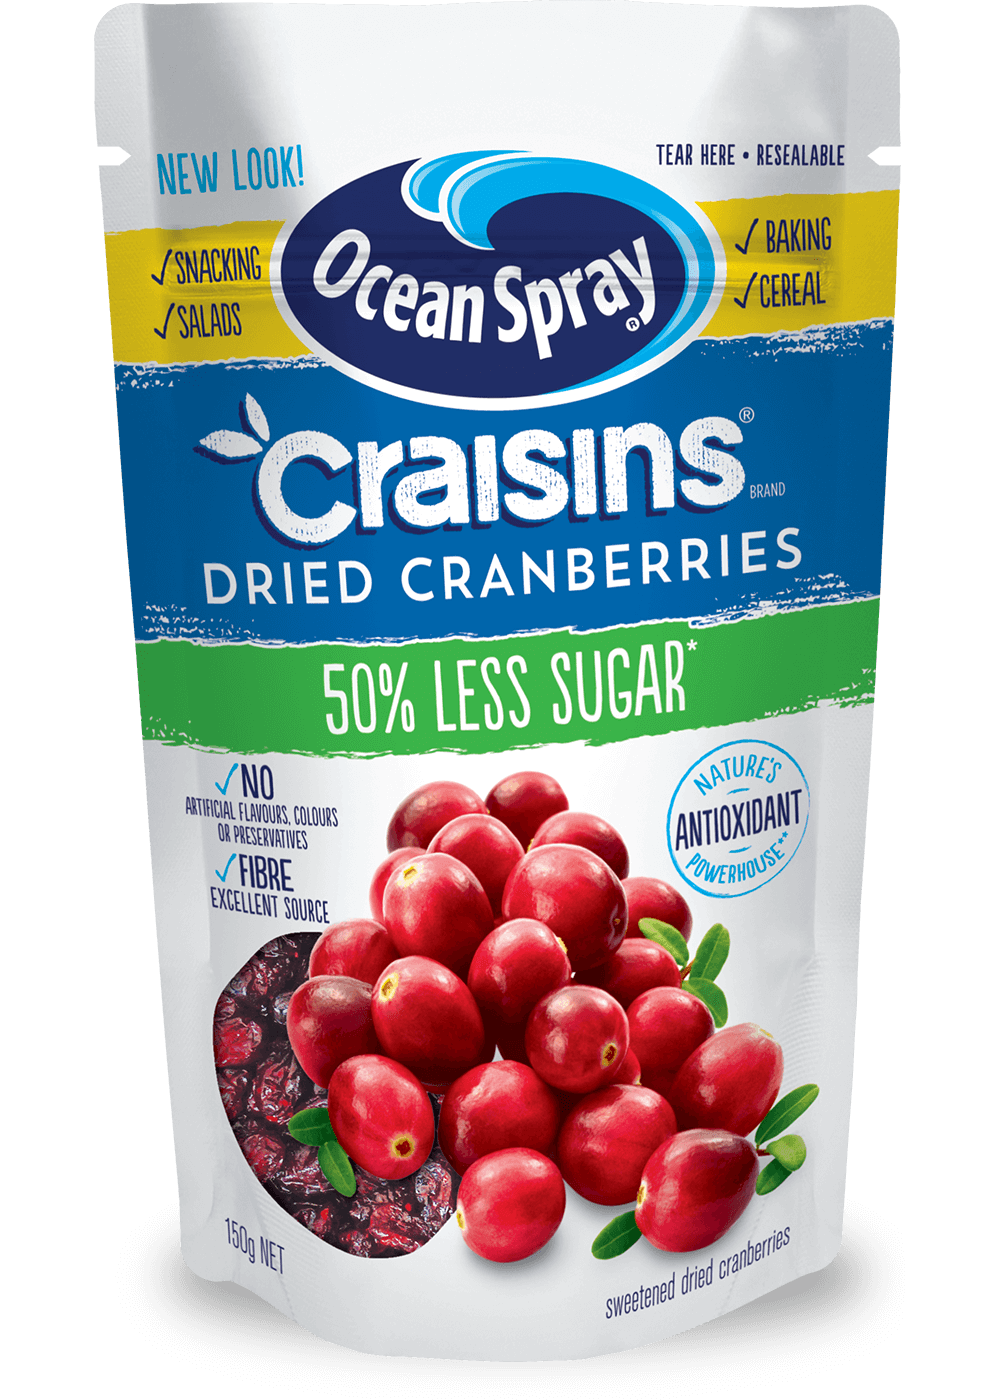 Reduced Sugar Craisins Dried Cranberries | Ocean Spray®